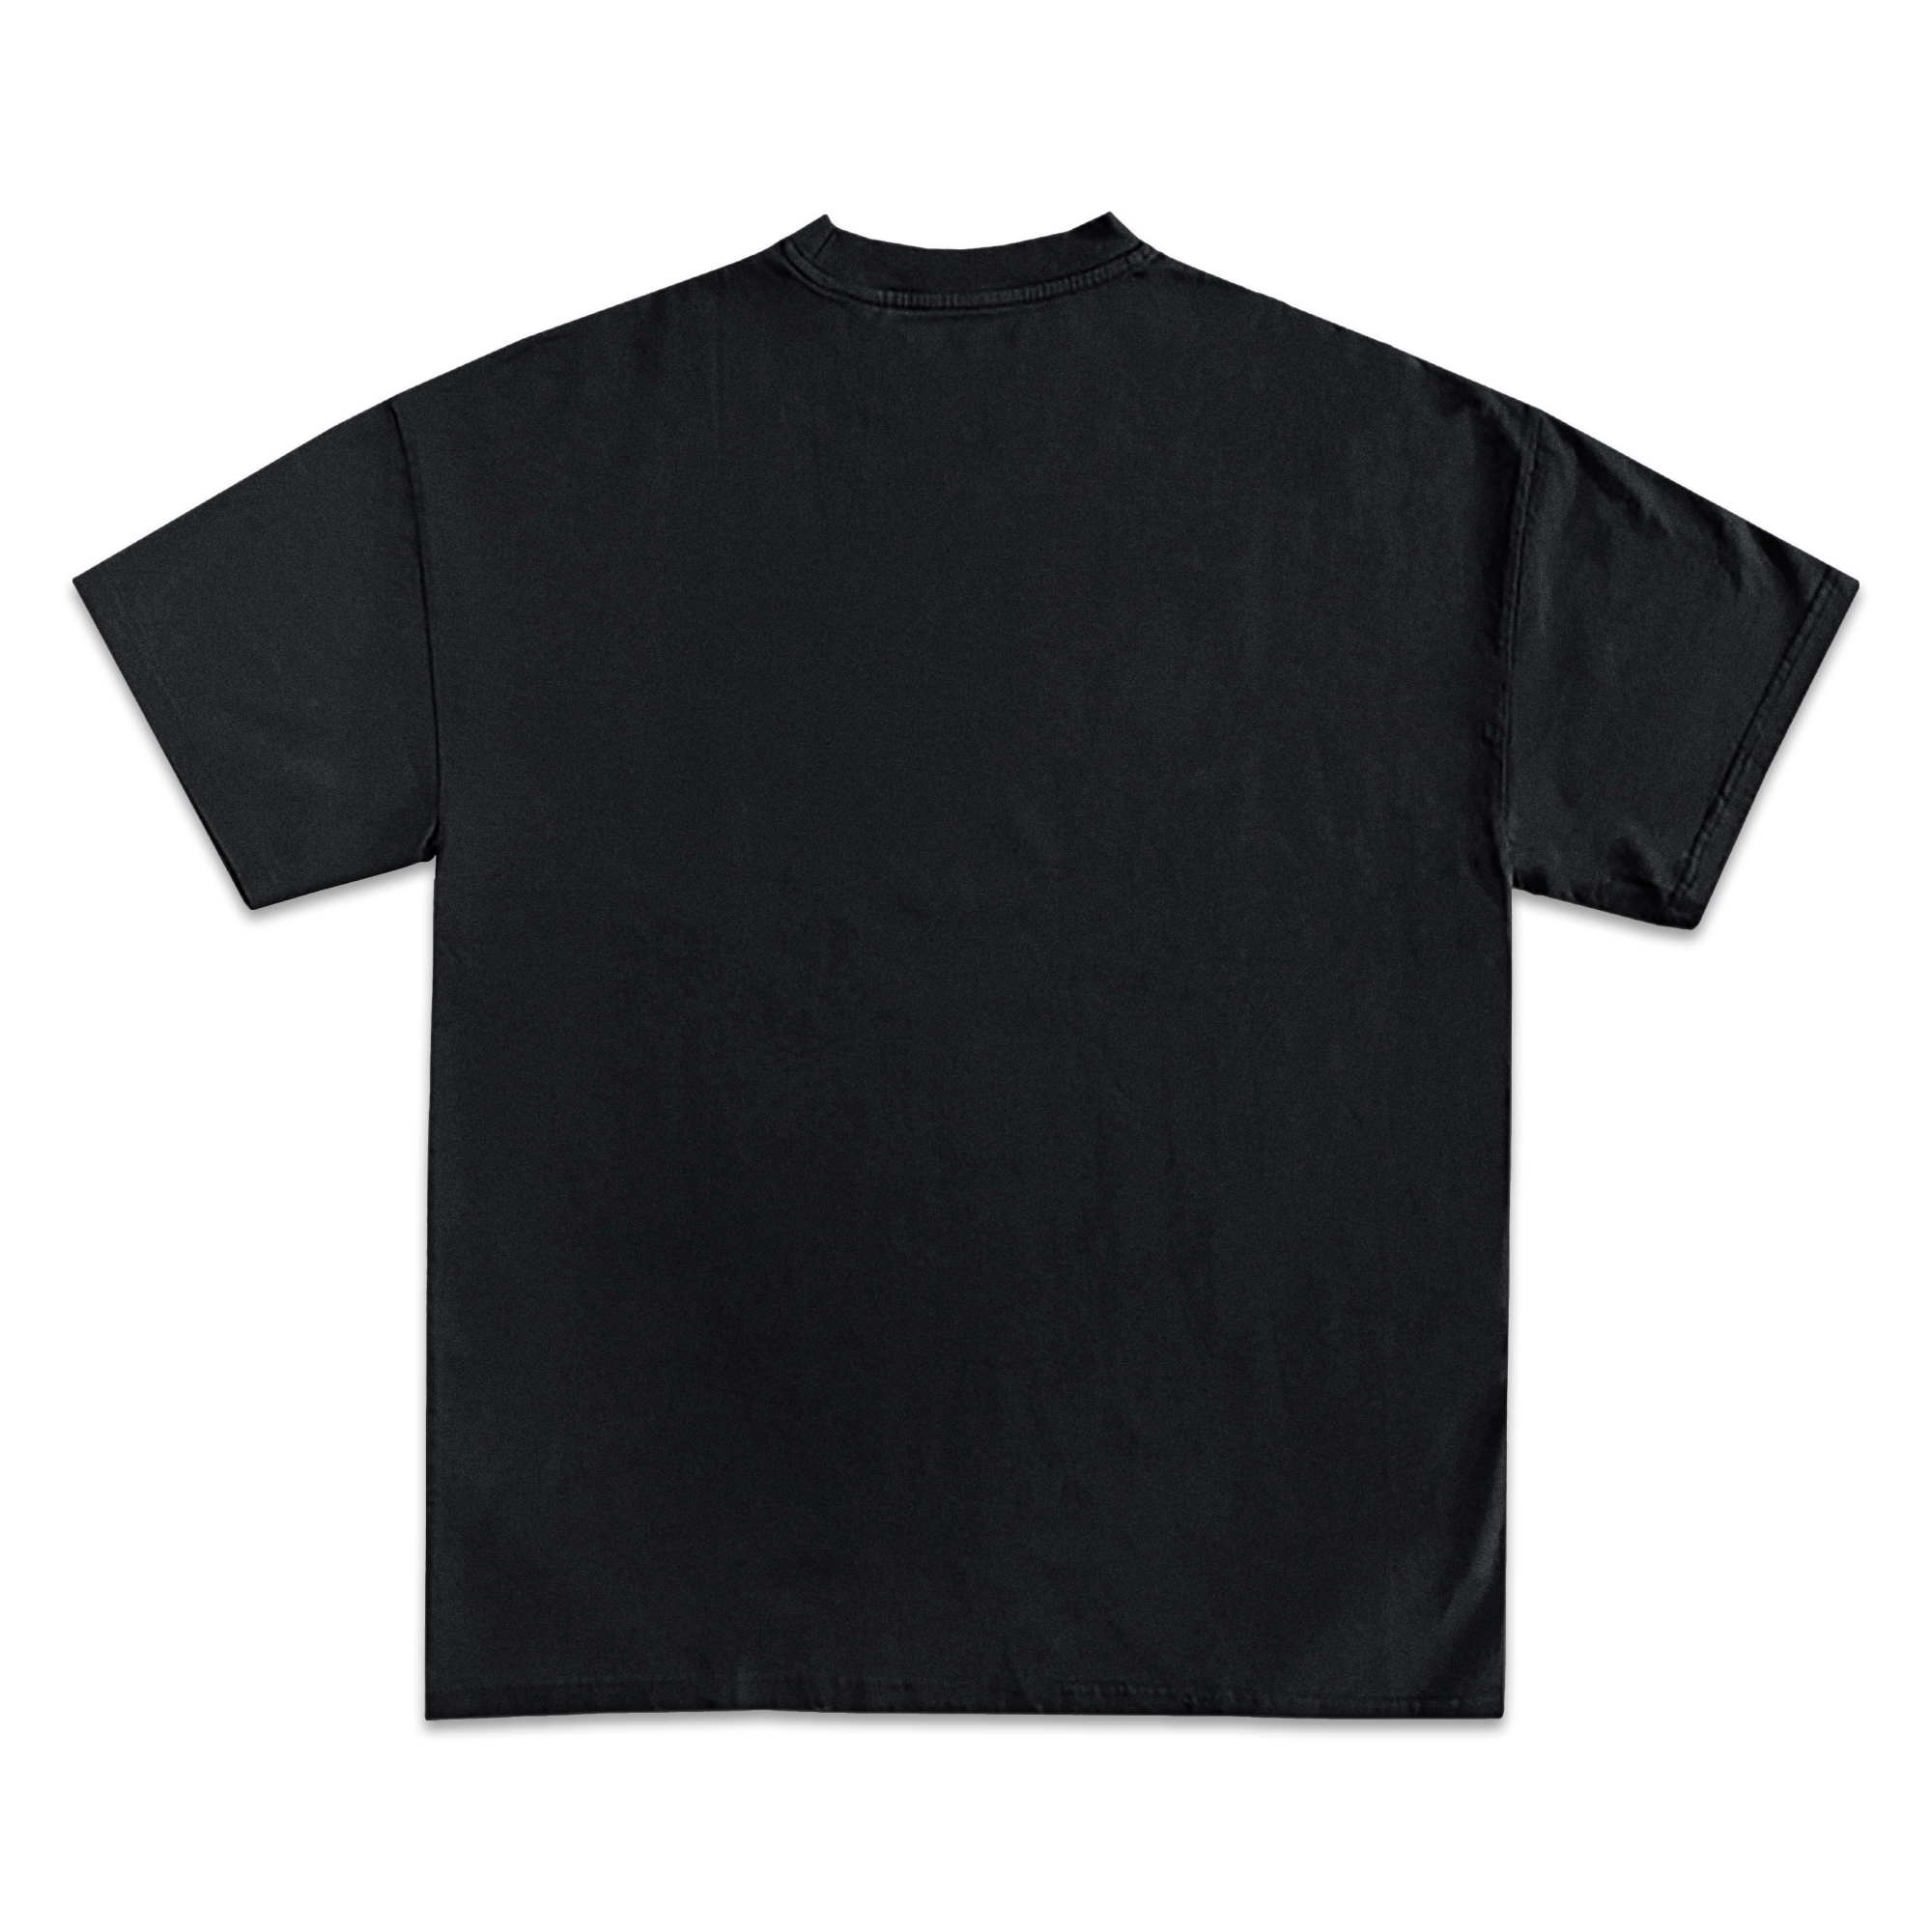 Malcolm X Jumbo Graphic T-Shirt